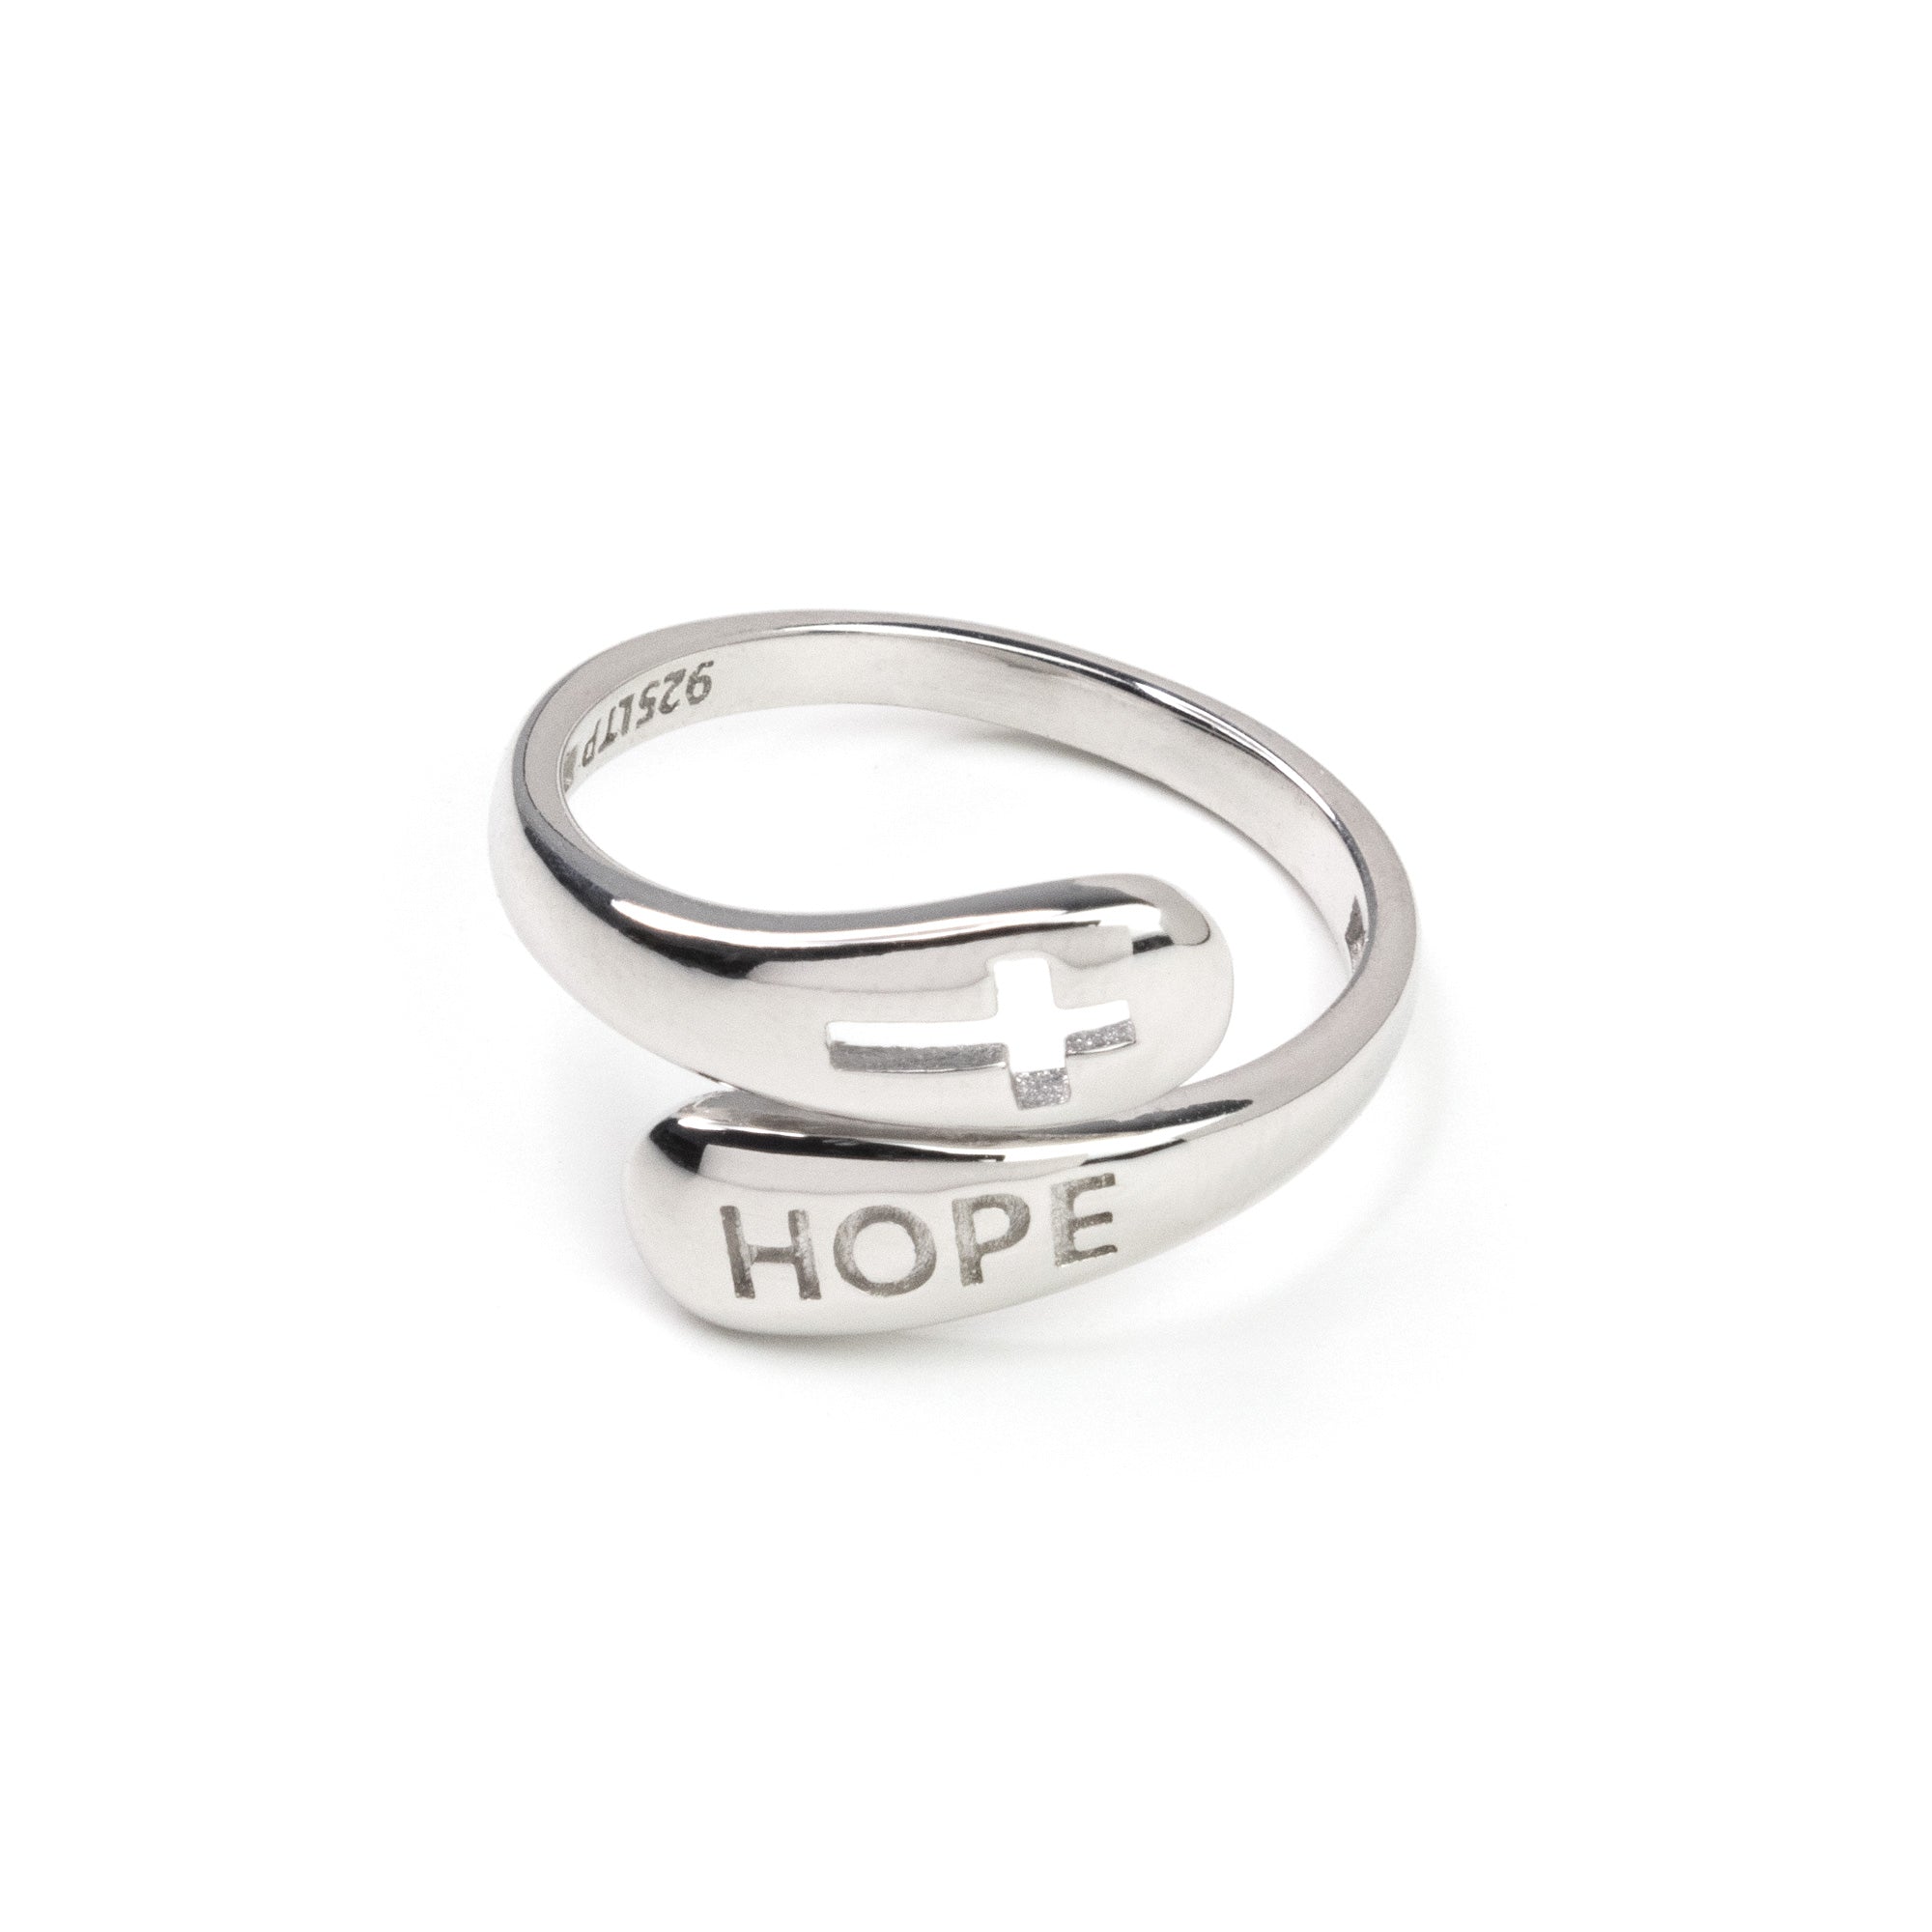 Supcare Mens Thumb Ring Men's Wedding Rings Size 7 Christian Rings for Men  Purity Ring Jesus Ring Cross Rings for Men|Amazon.com